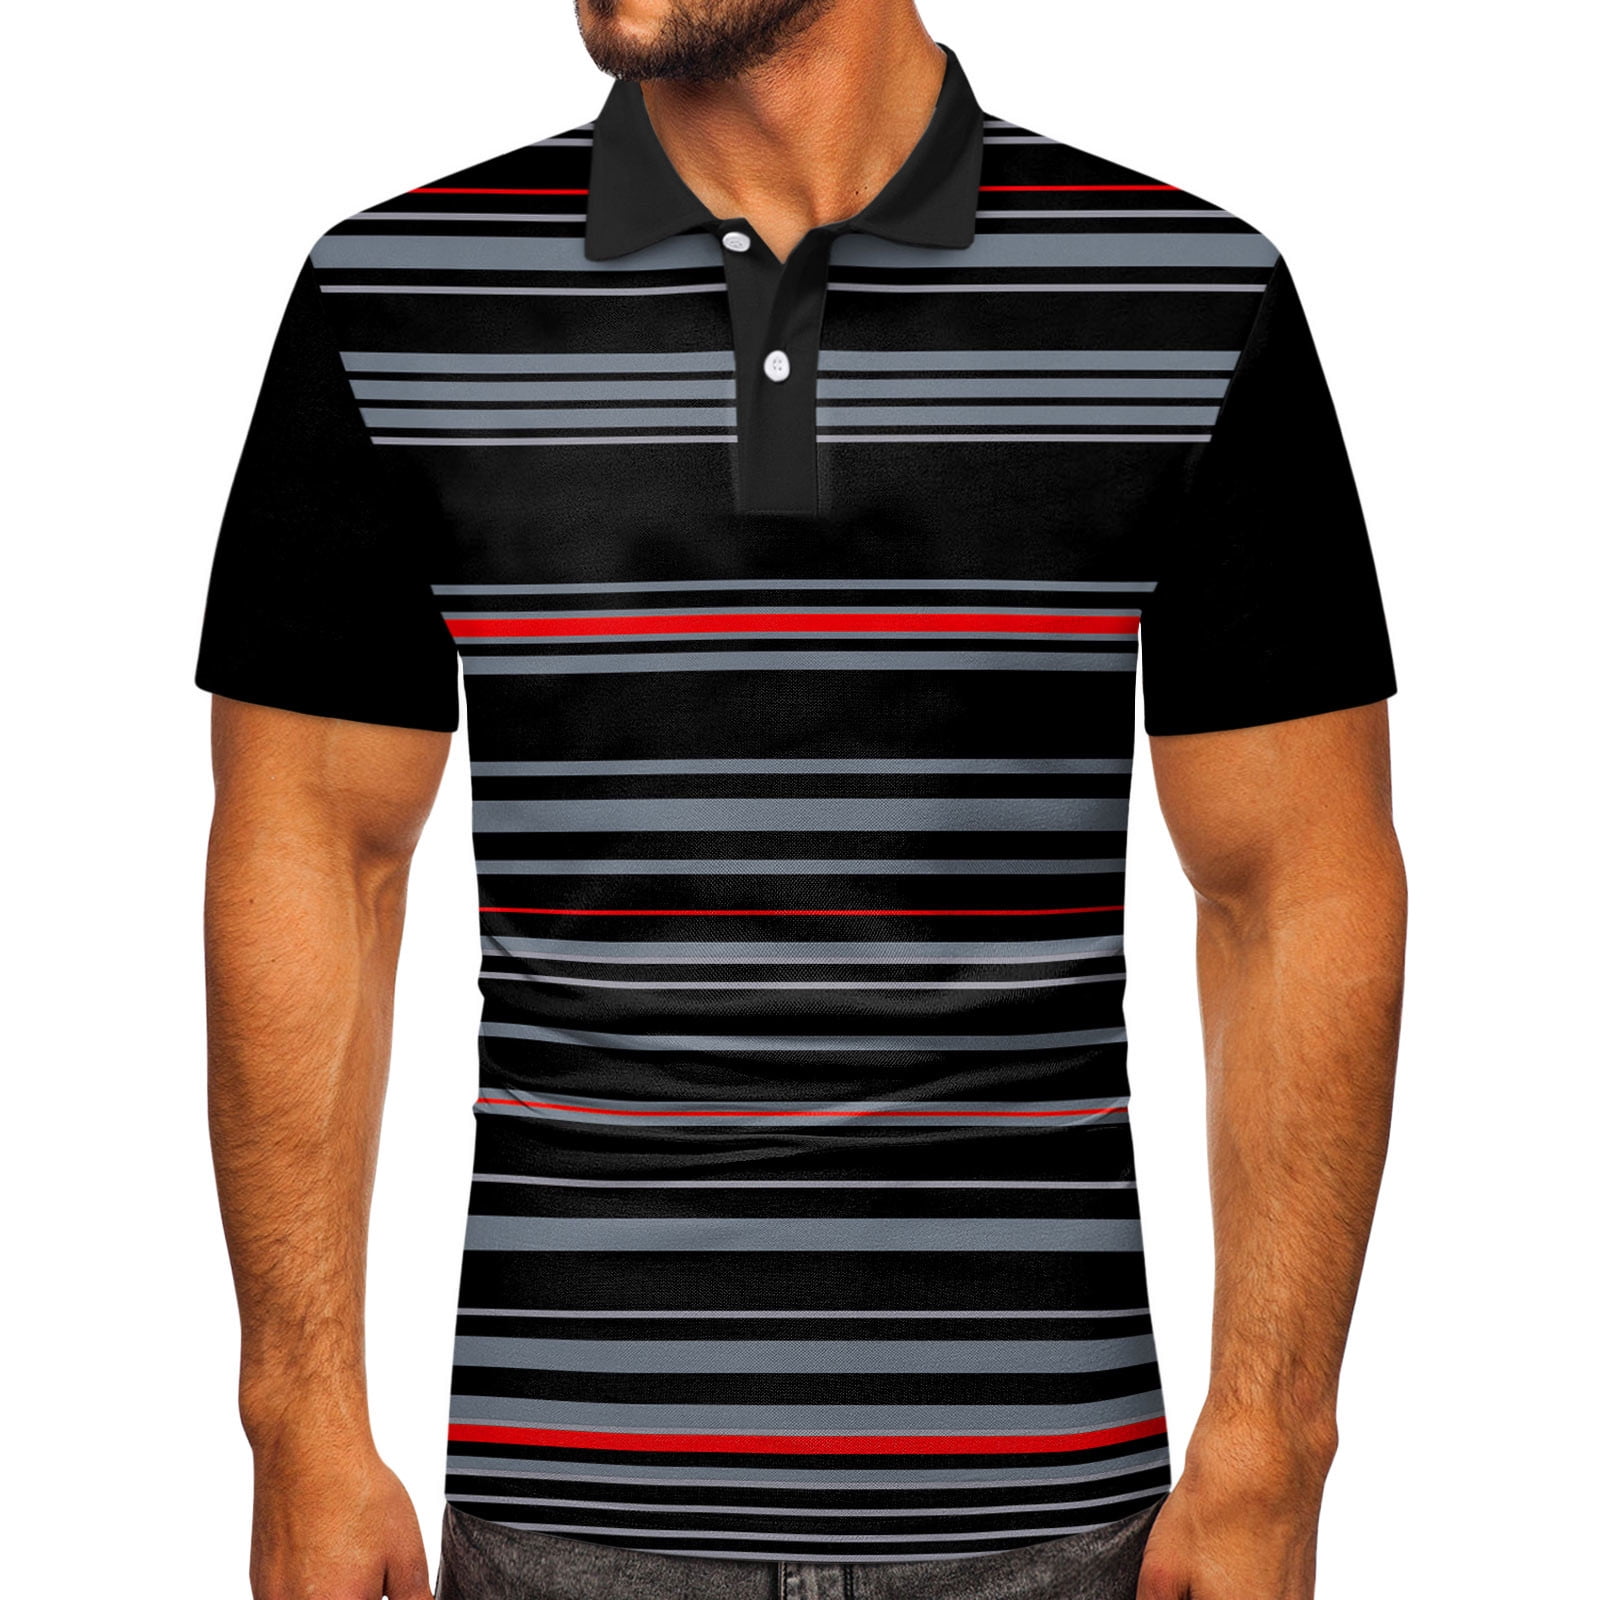 Gubotare Ralph Lauren Polo Shirts For Men Funny Golf Shirts for Men, Golf for Men, Crazy Golf Shirts for Men,Gray XXL Walmart.com